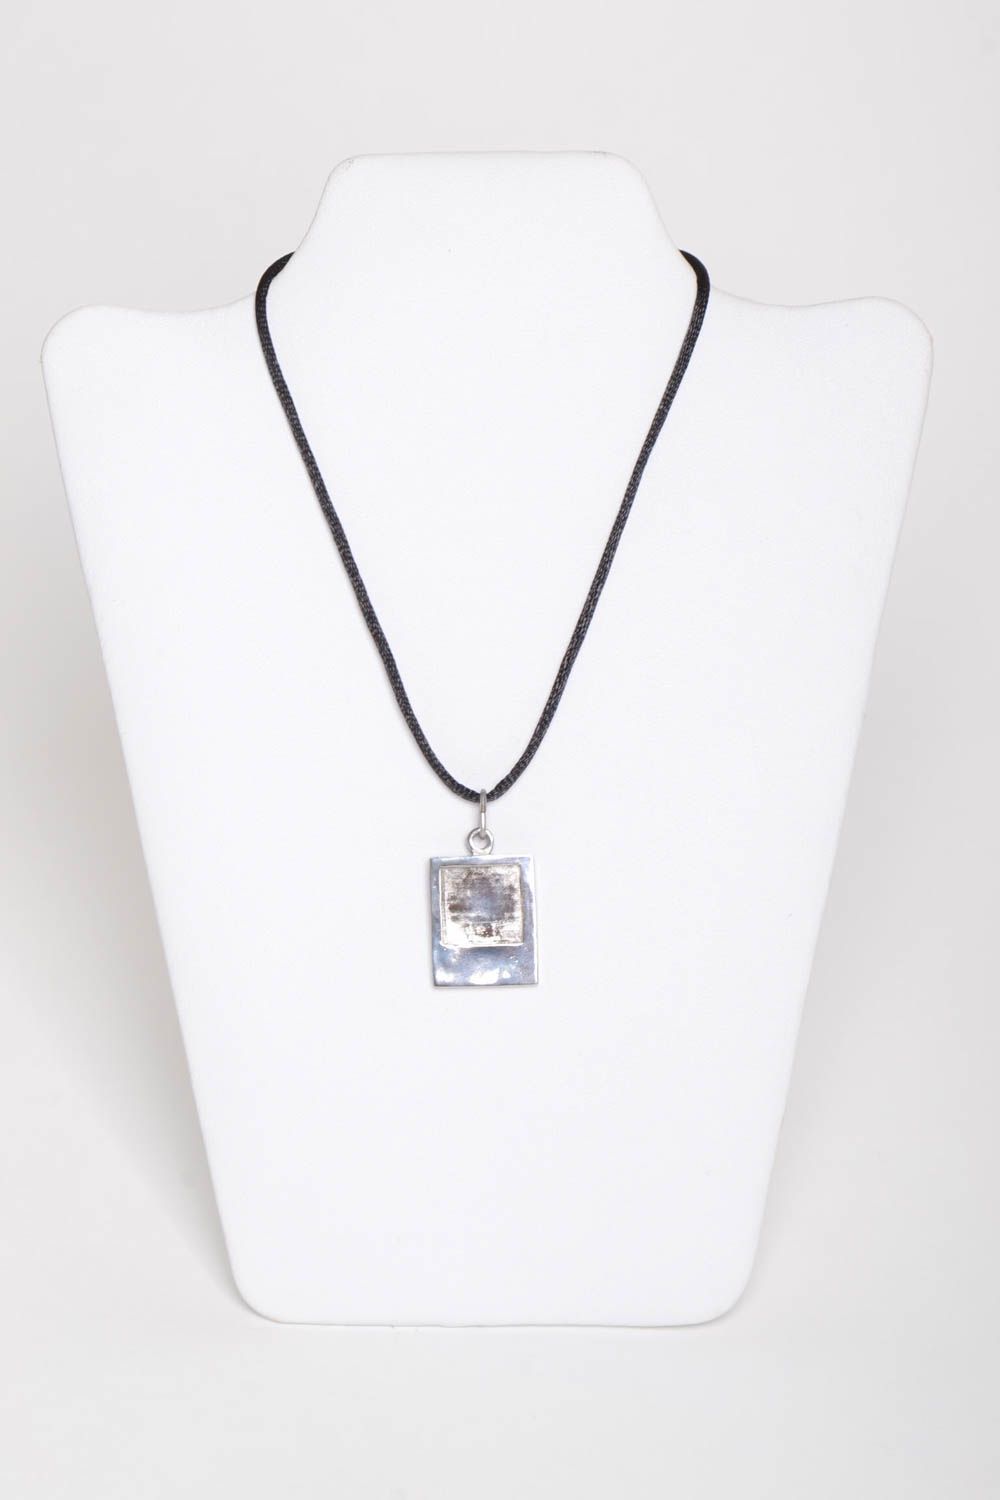 Stylish handmade metal pendant neck pendant design fashion trends gift ideas photo 2